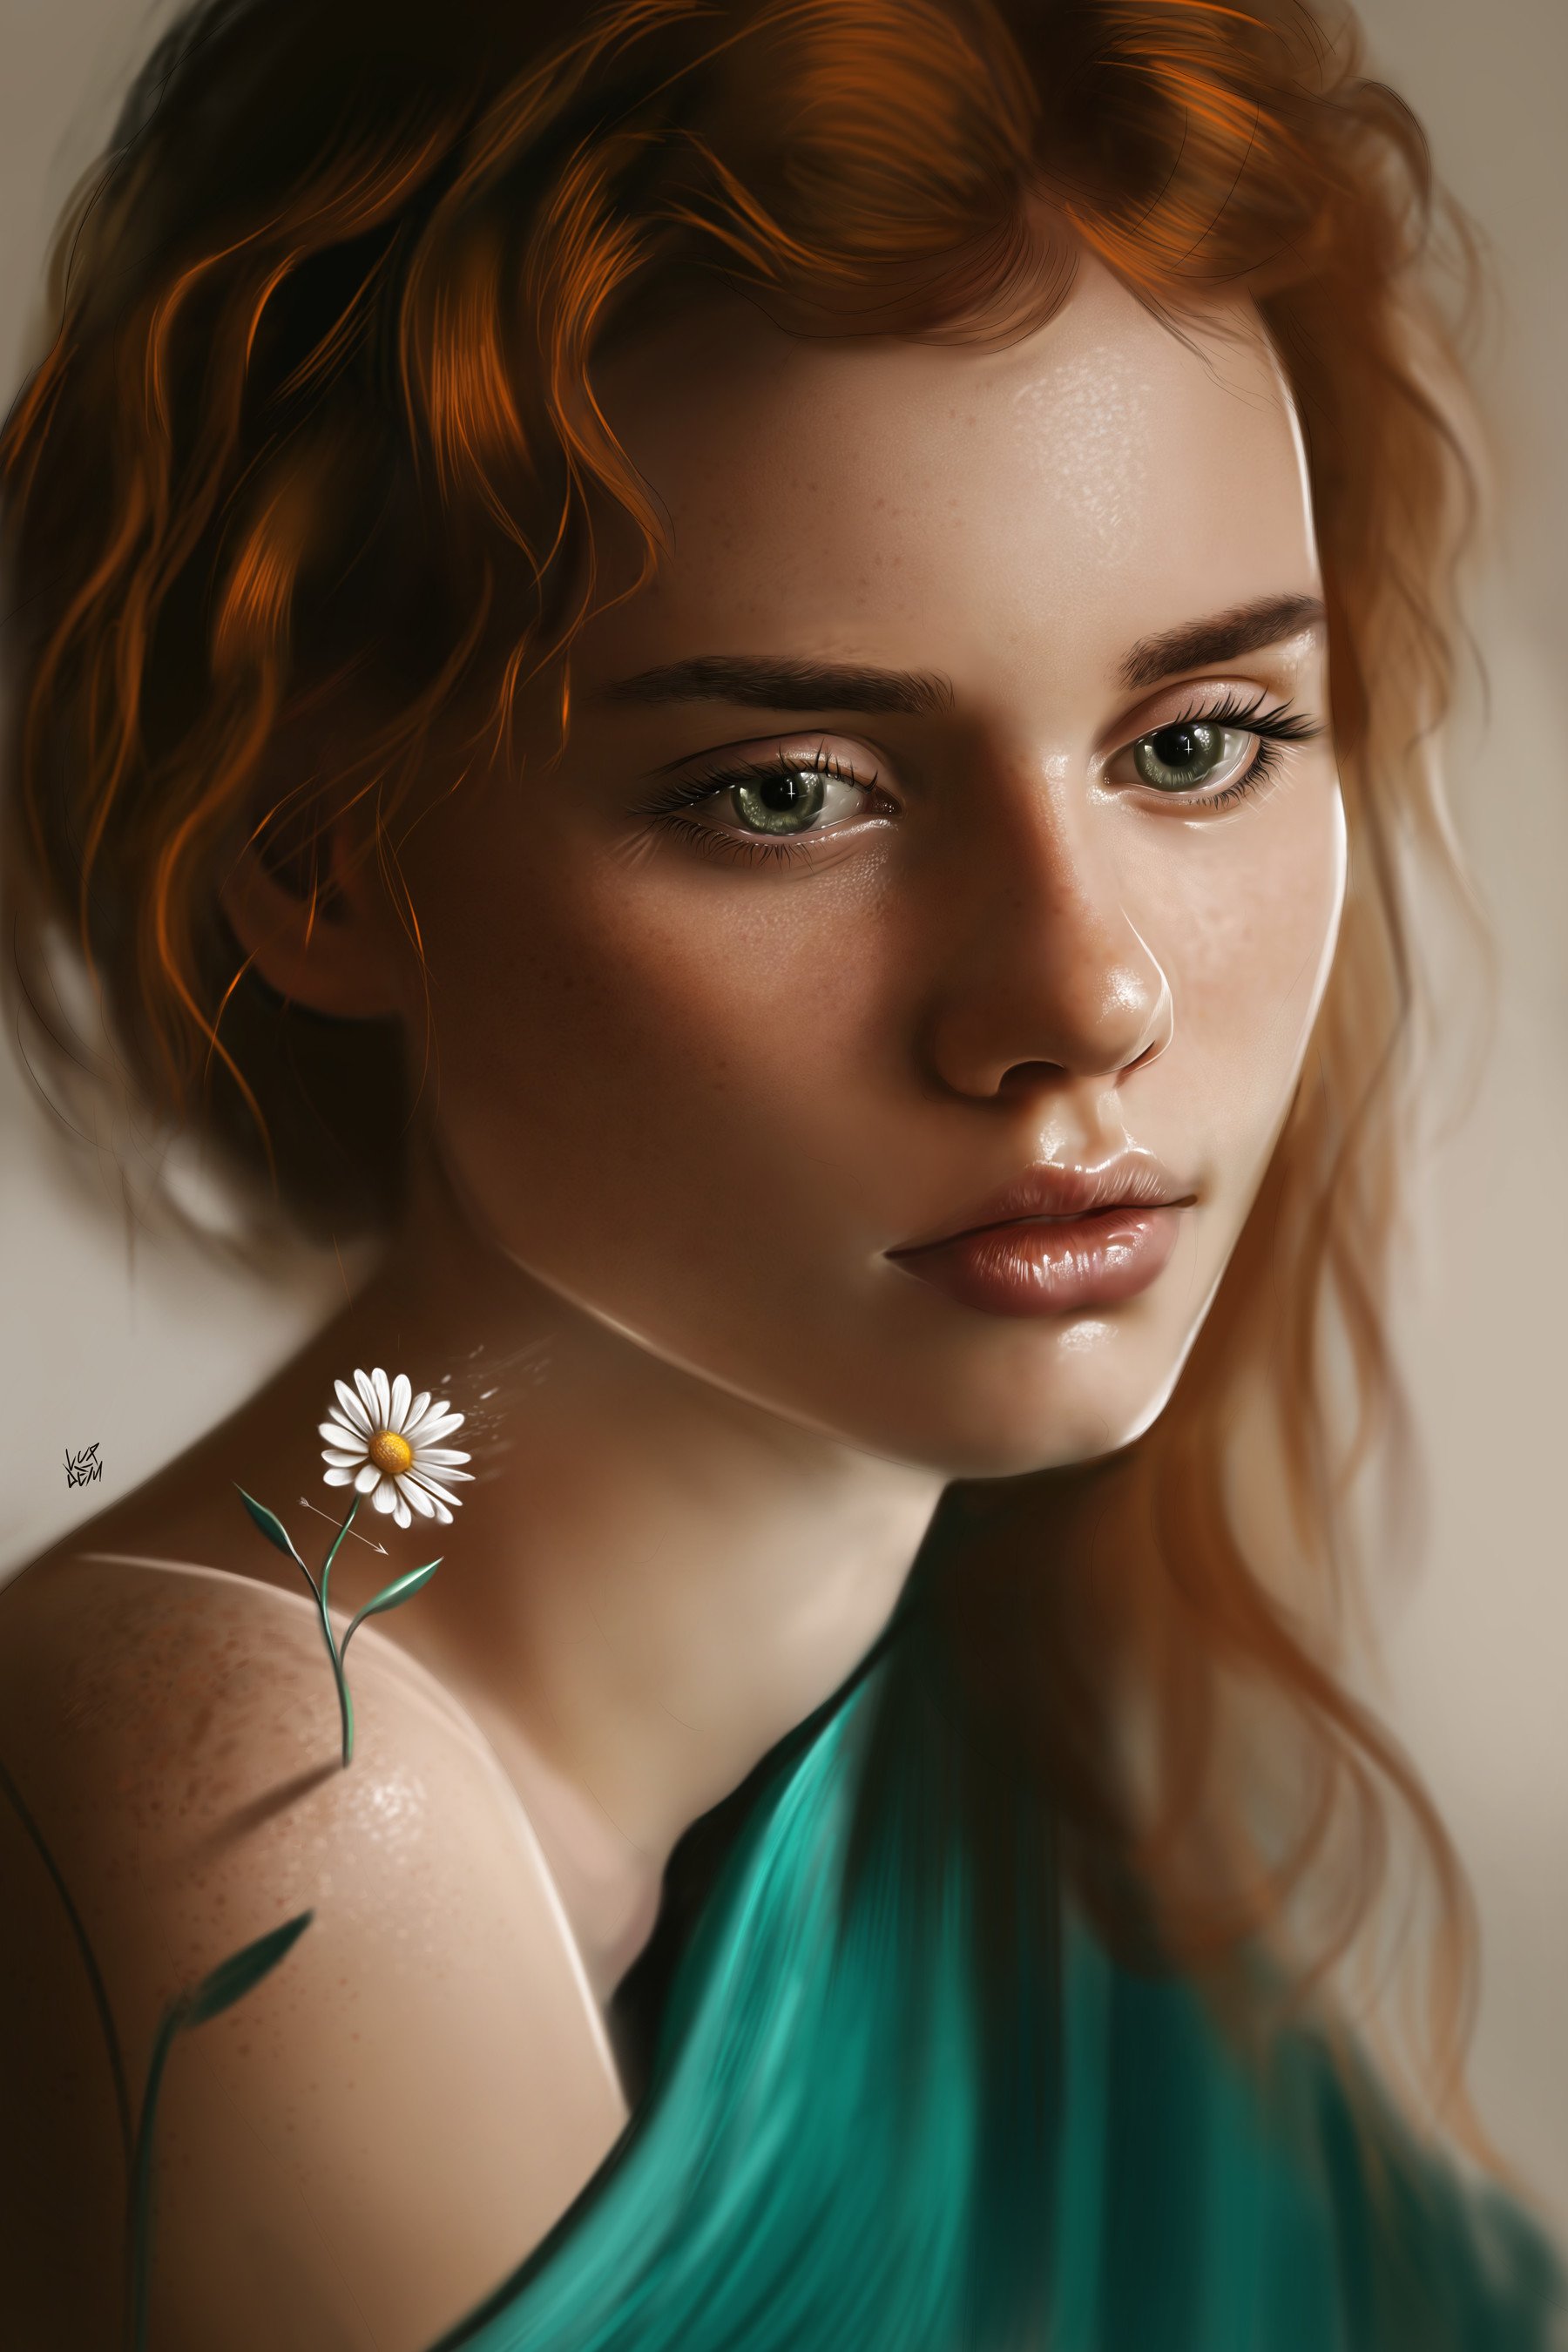 Realistic Portrait Painting | vlr.eng.br